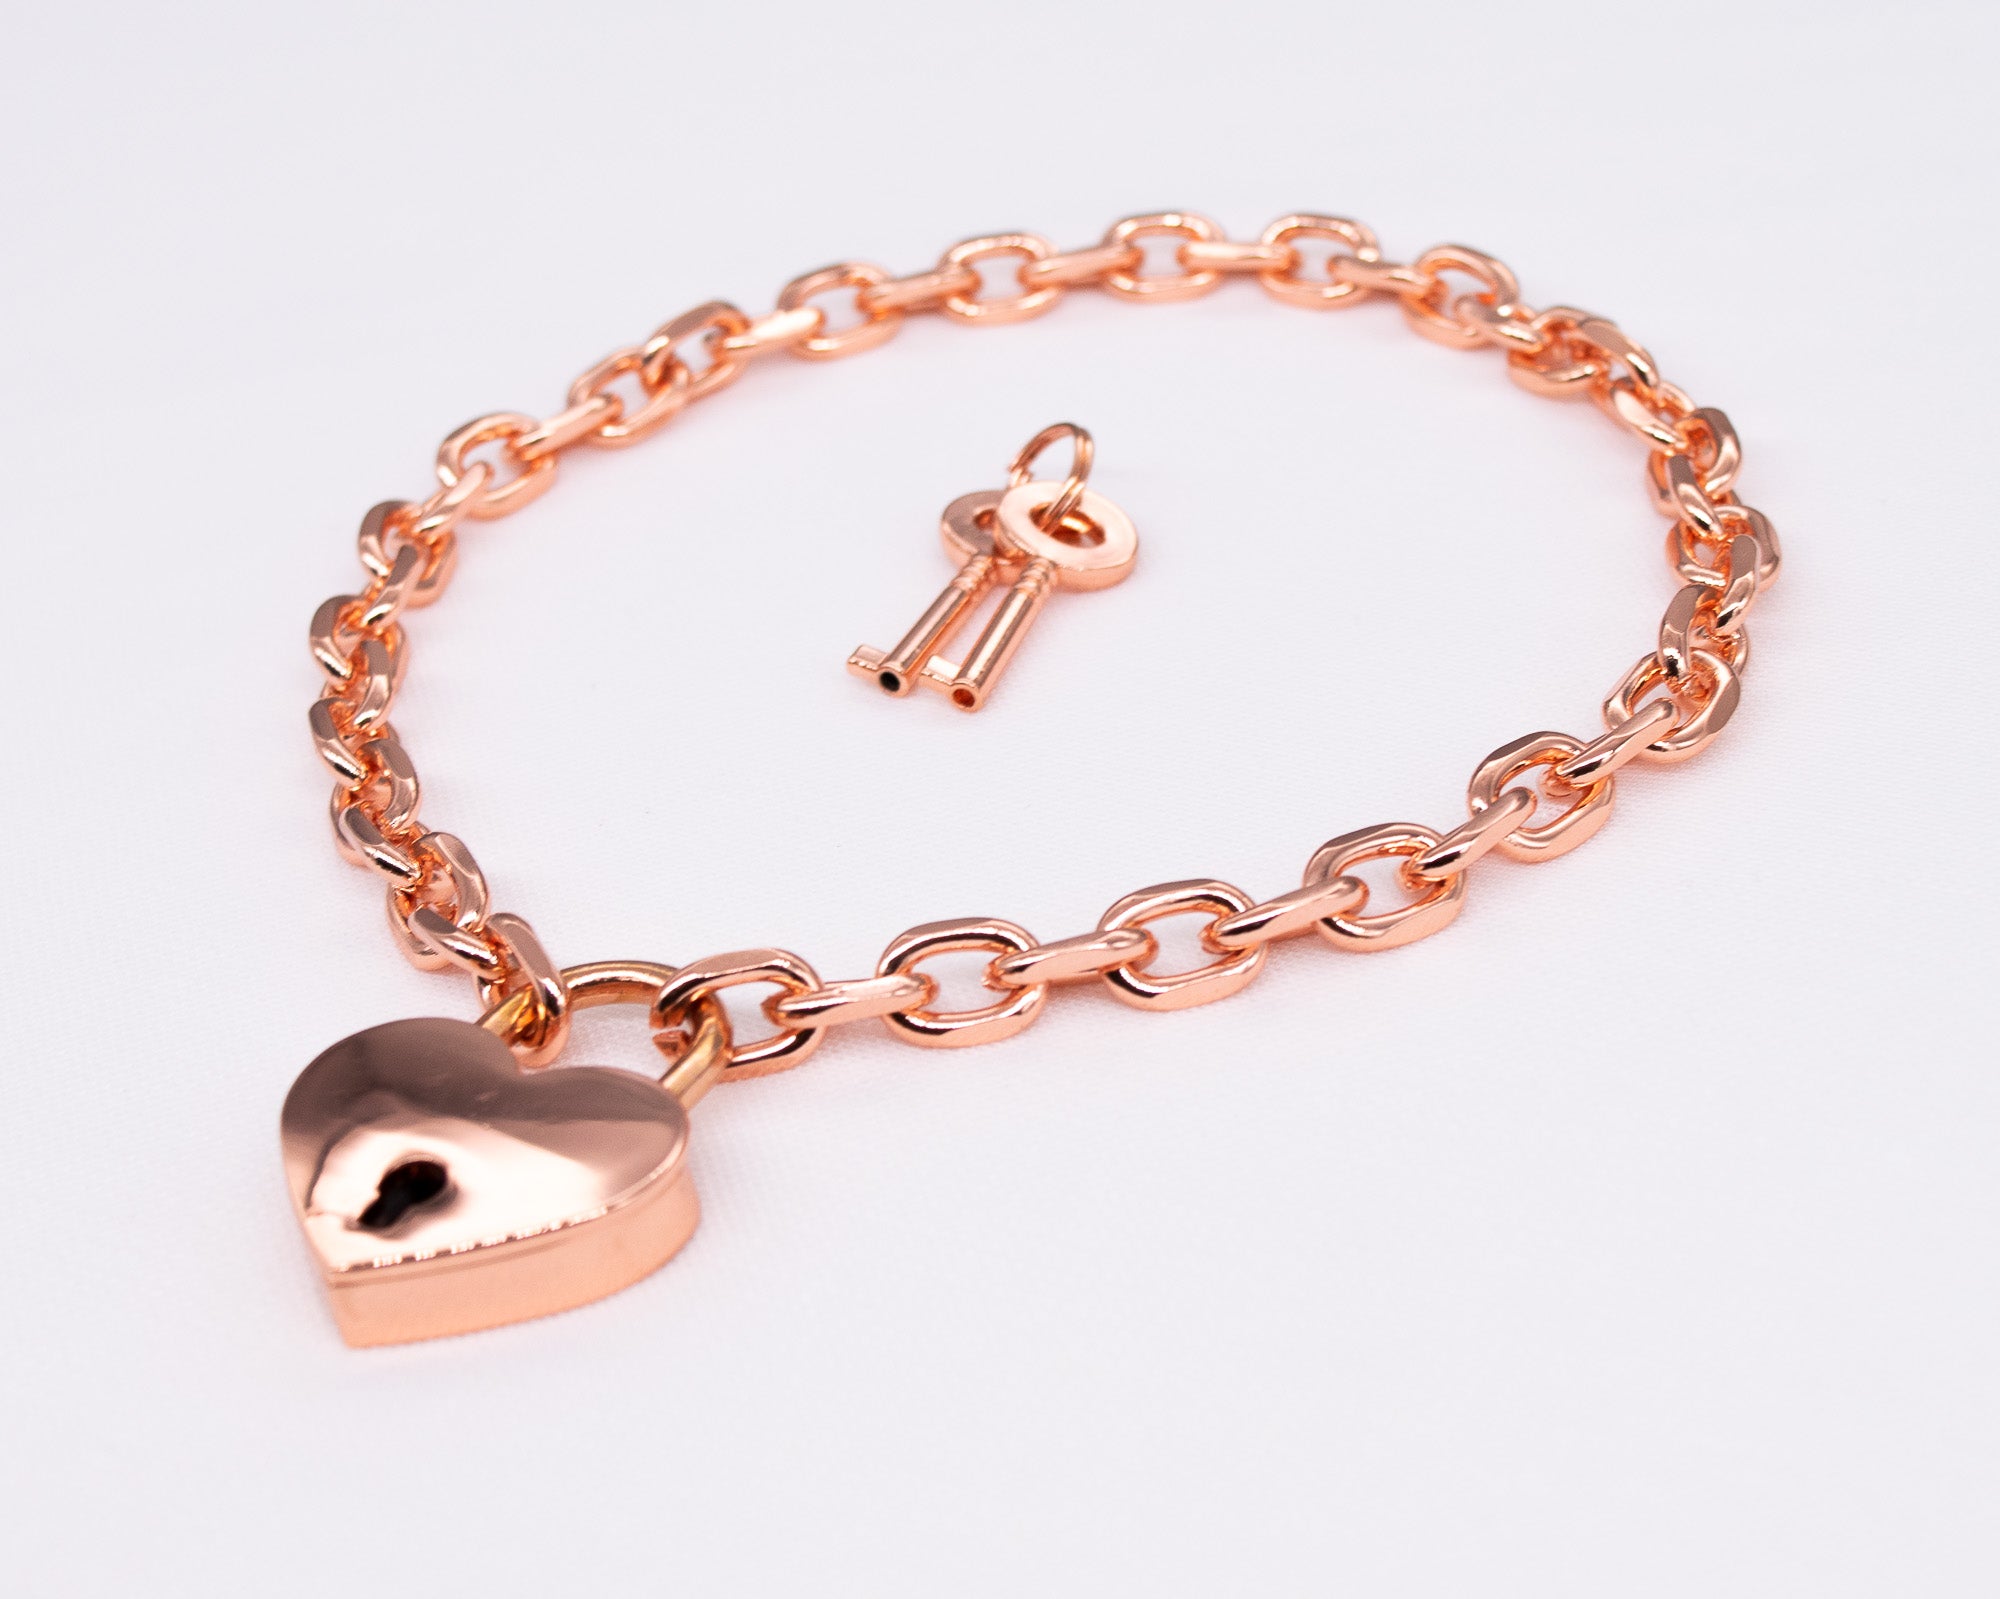 Discreet Day Collar - Heart Locked O-link Chain Choker